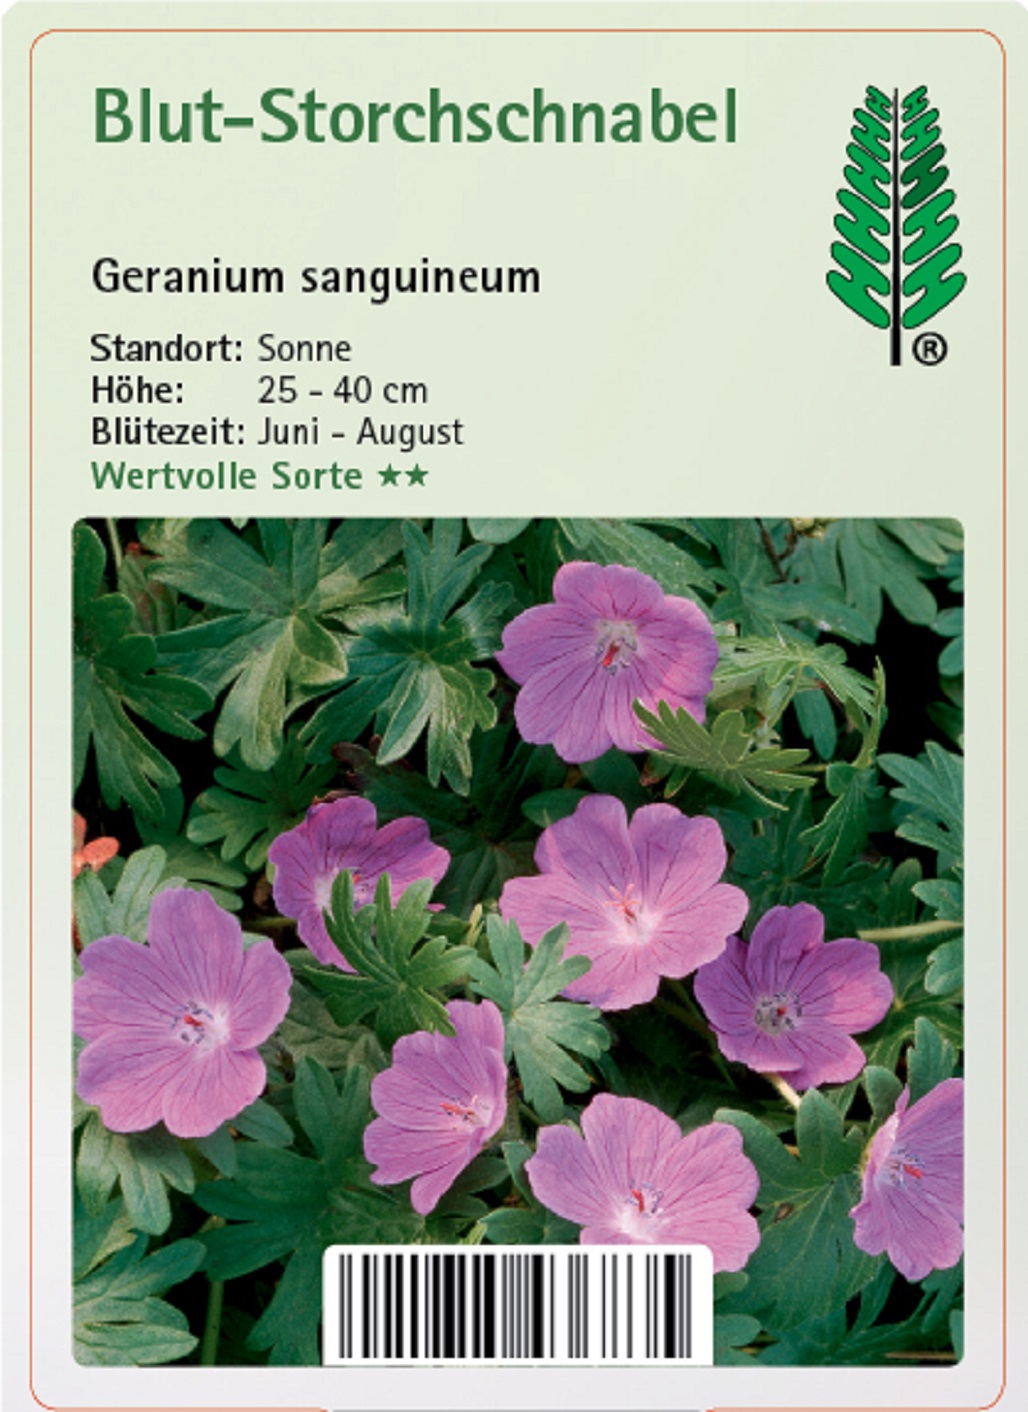 Blutroter Storchschnabel - Geranium sanguineum, 11cm Topf